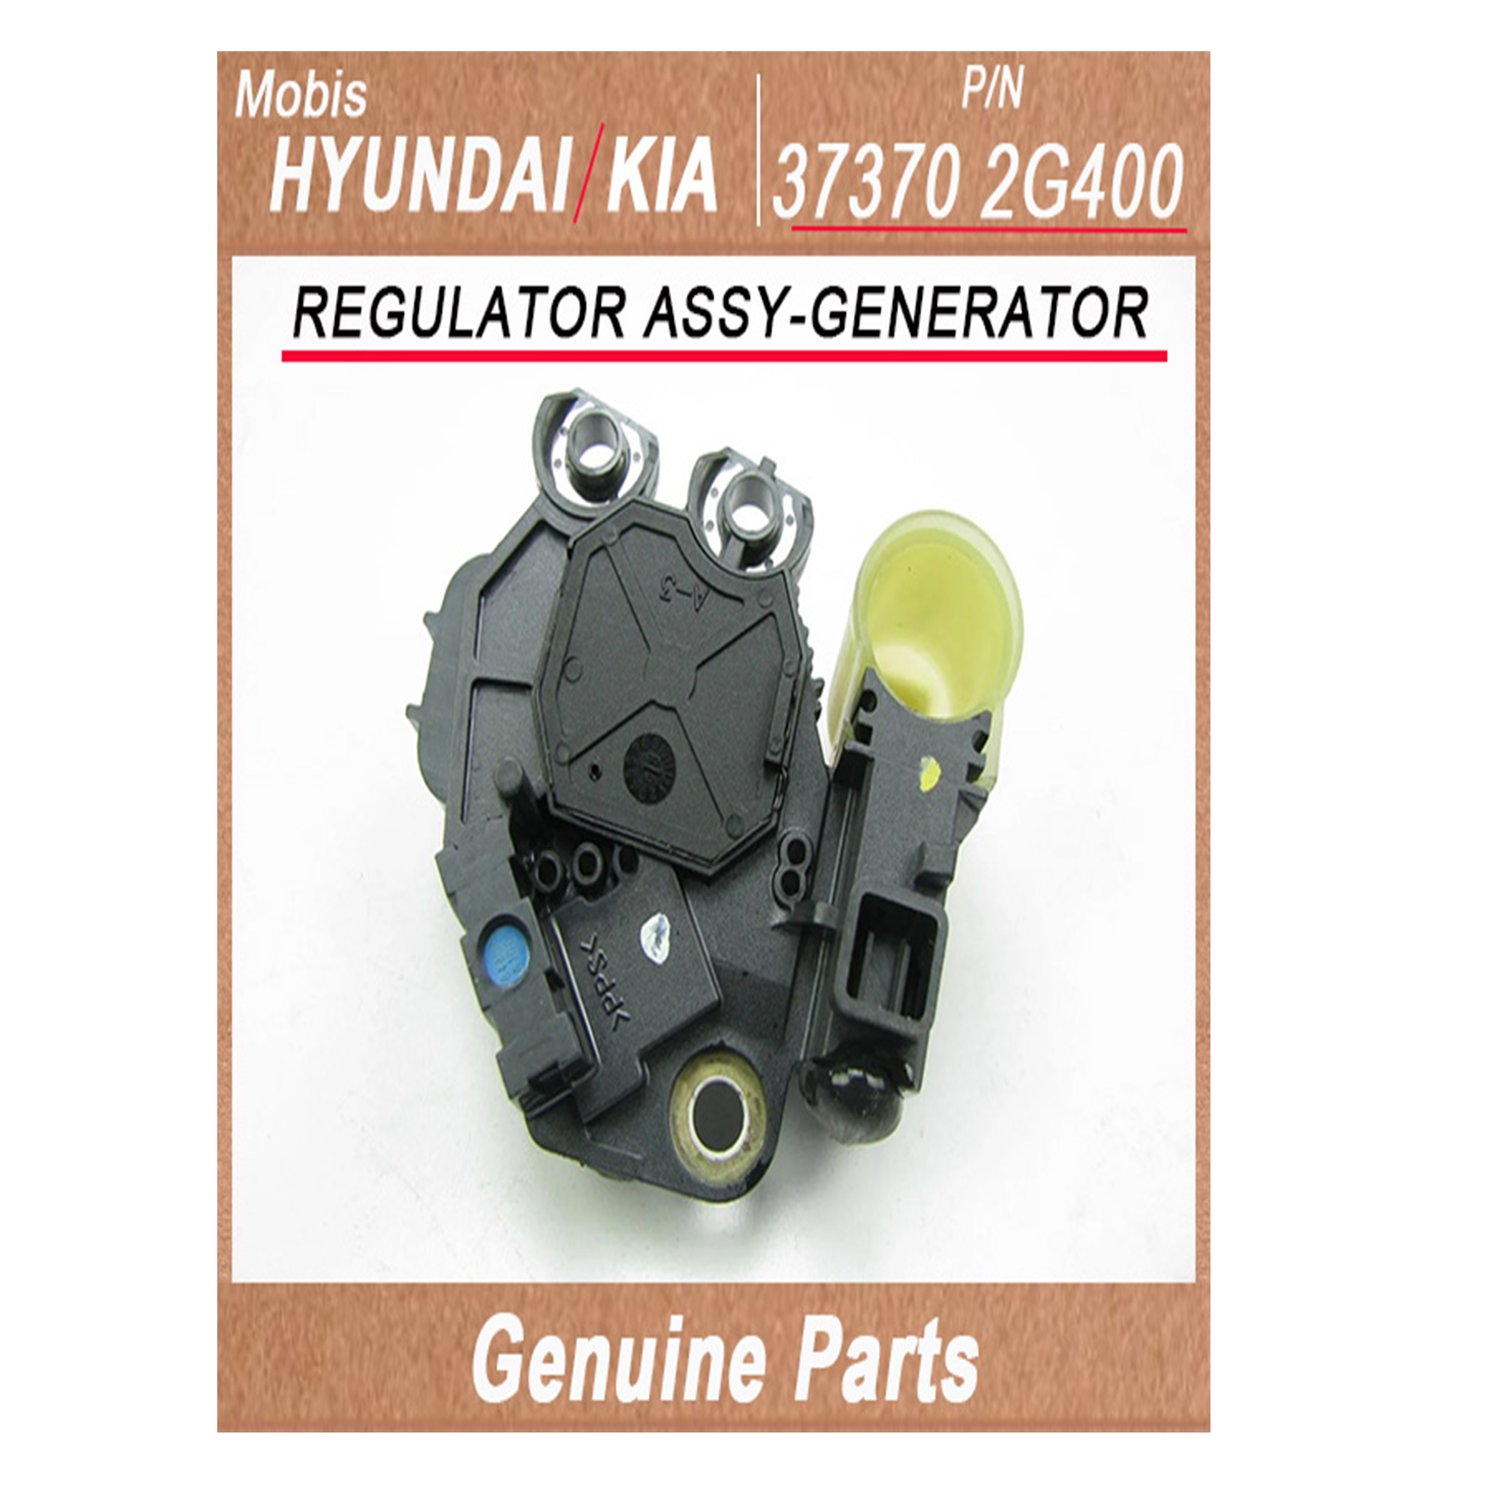 373702G400 _ REGULATOR ASSY_GENERATOR _ Genuine Korean Automotive Spare Parts _ Hyundai Kia _Mobis_